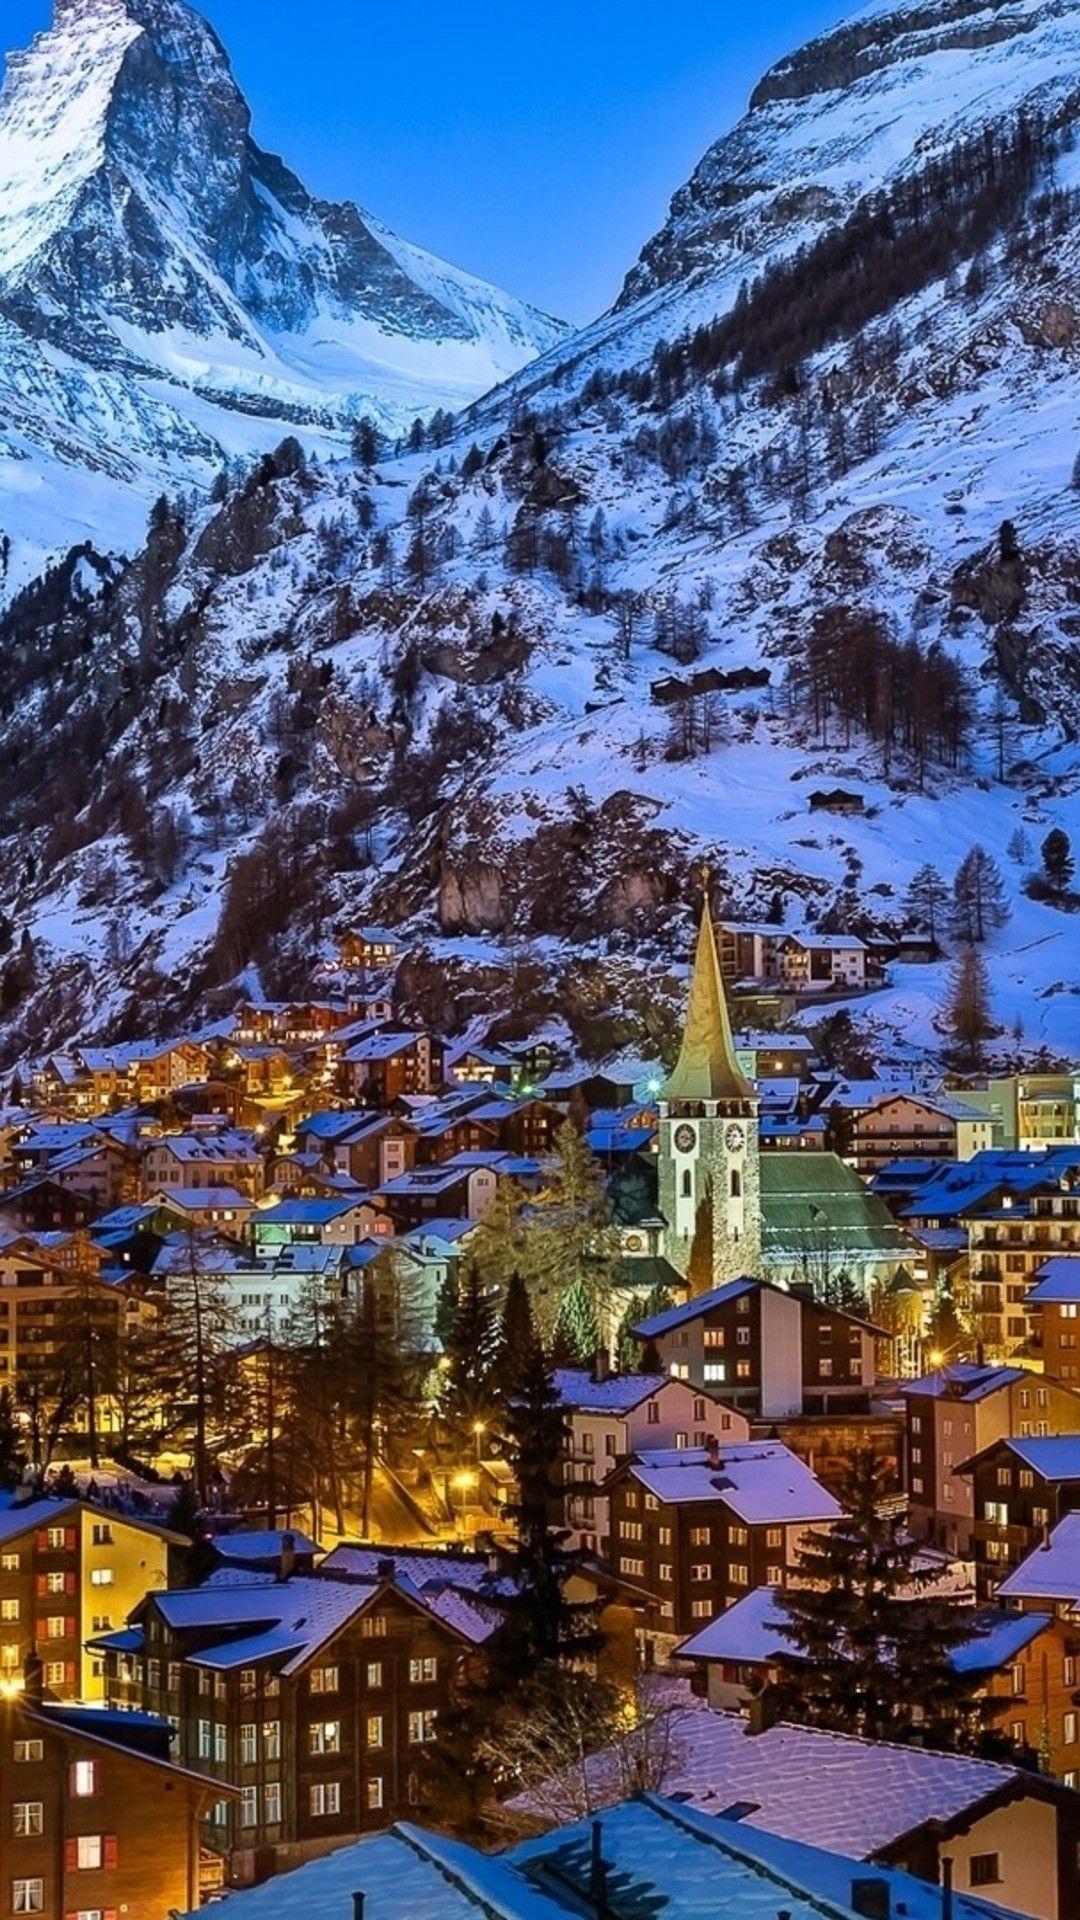 Wallpaper Download 1080x1920 Winter at Zermatt Valley Switzerland. Winter Wallpaper. Seasons Wallpaper.. Cool places to visit, Best ski resorts, Places to visit